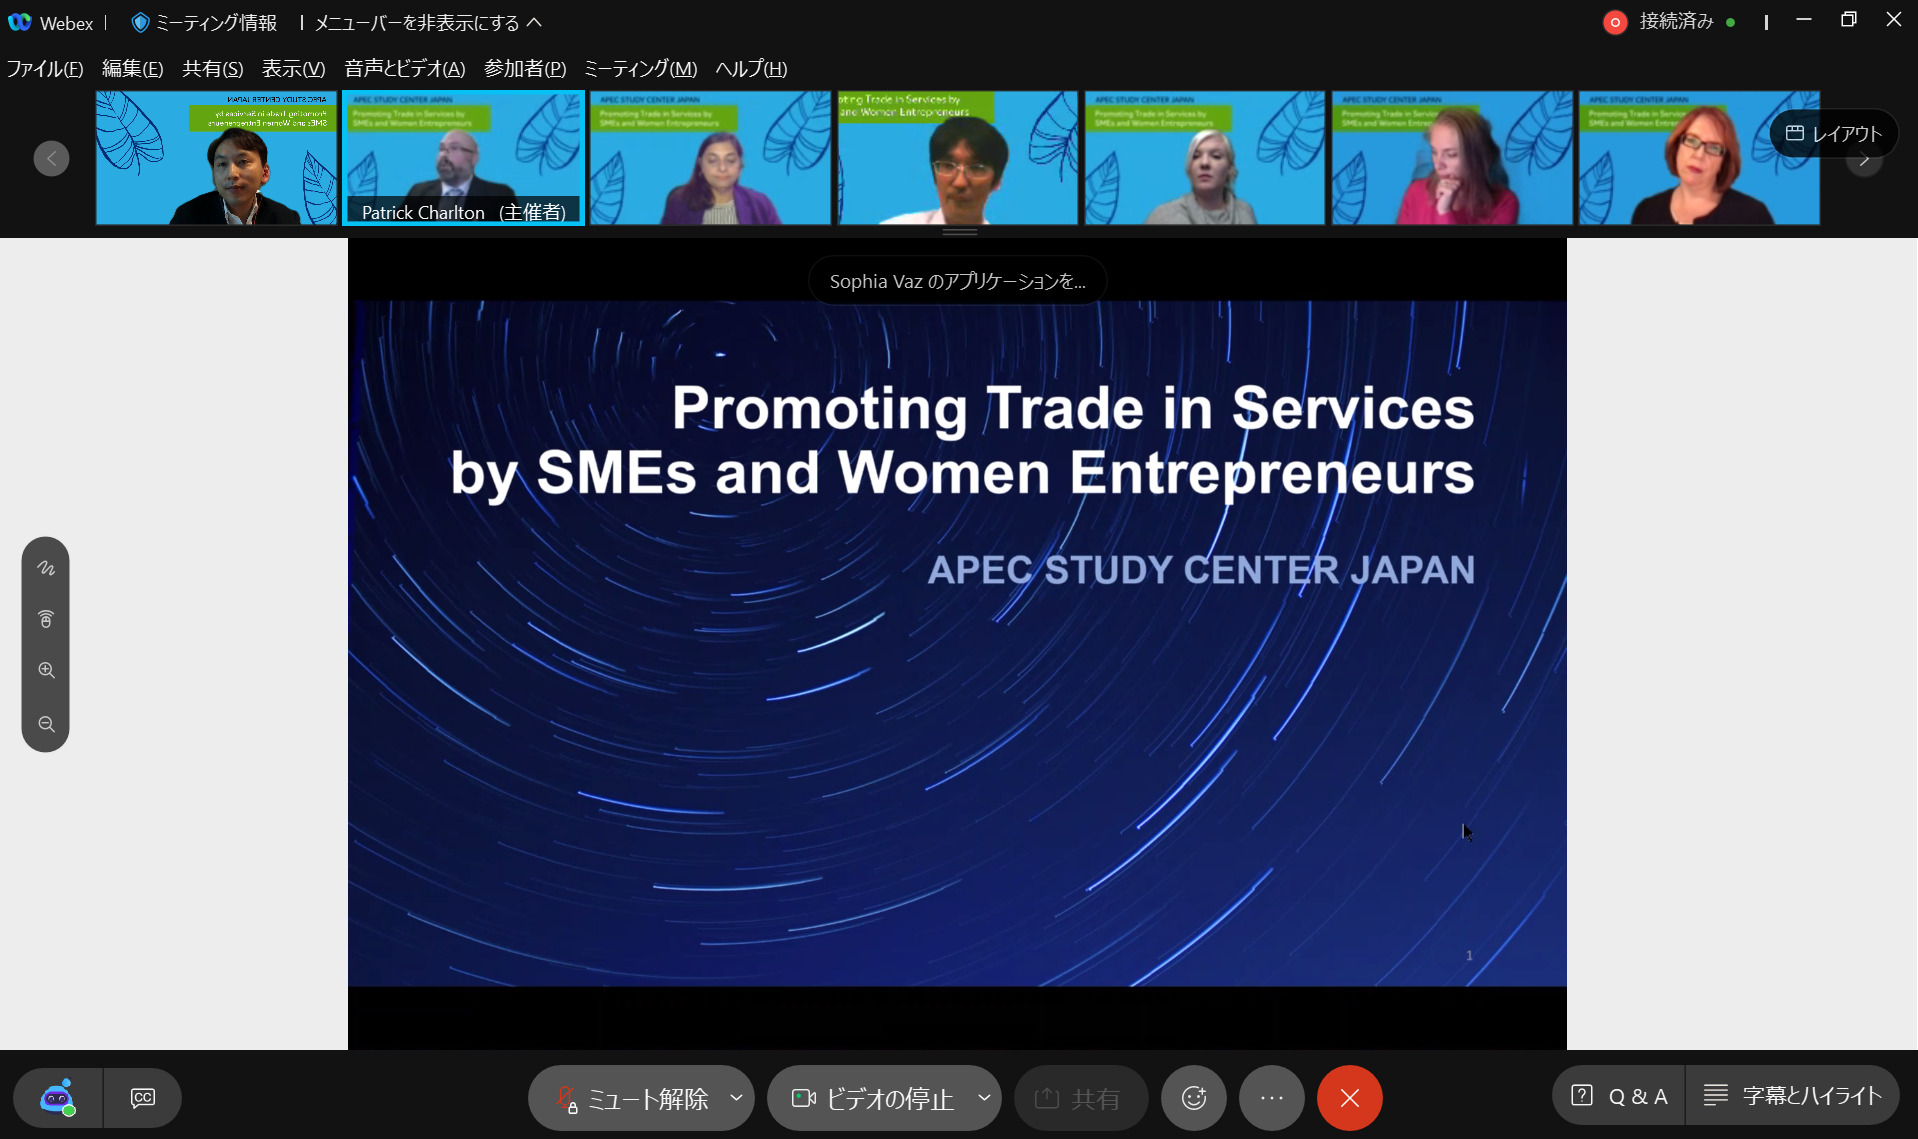 APEC STUDY CENTER JAPAN主催イベント「女性起業家と中小企業の貿易を促進する」に登壇しました。